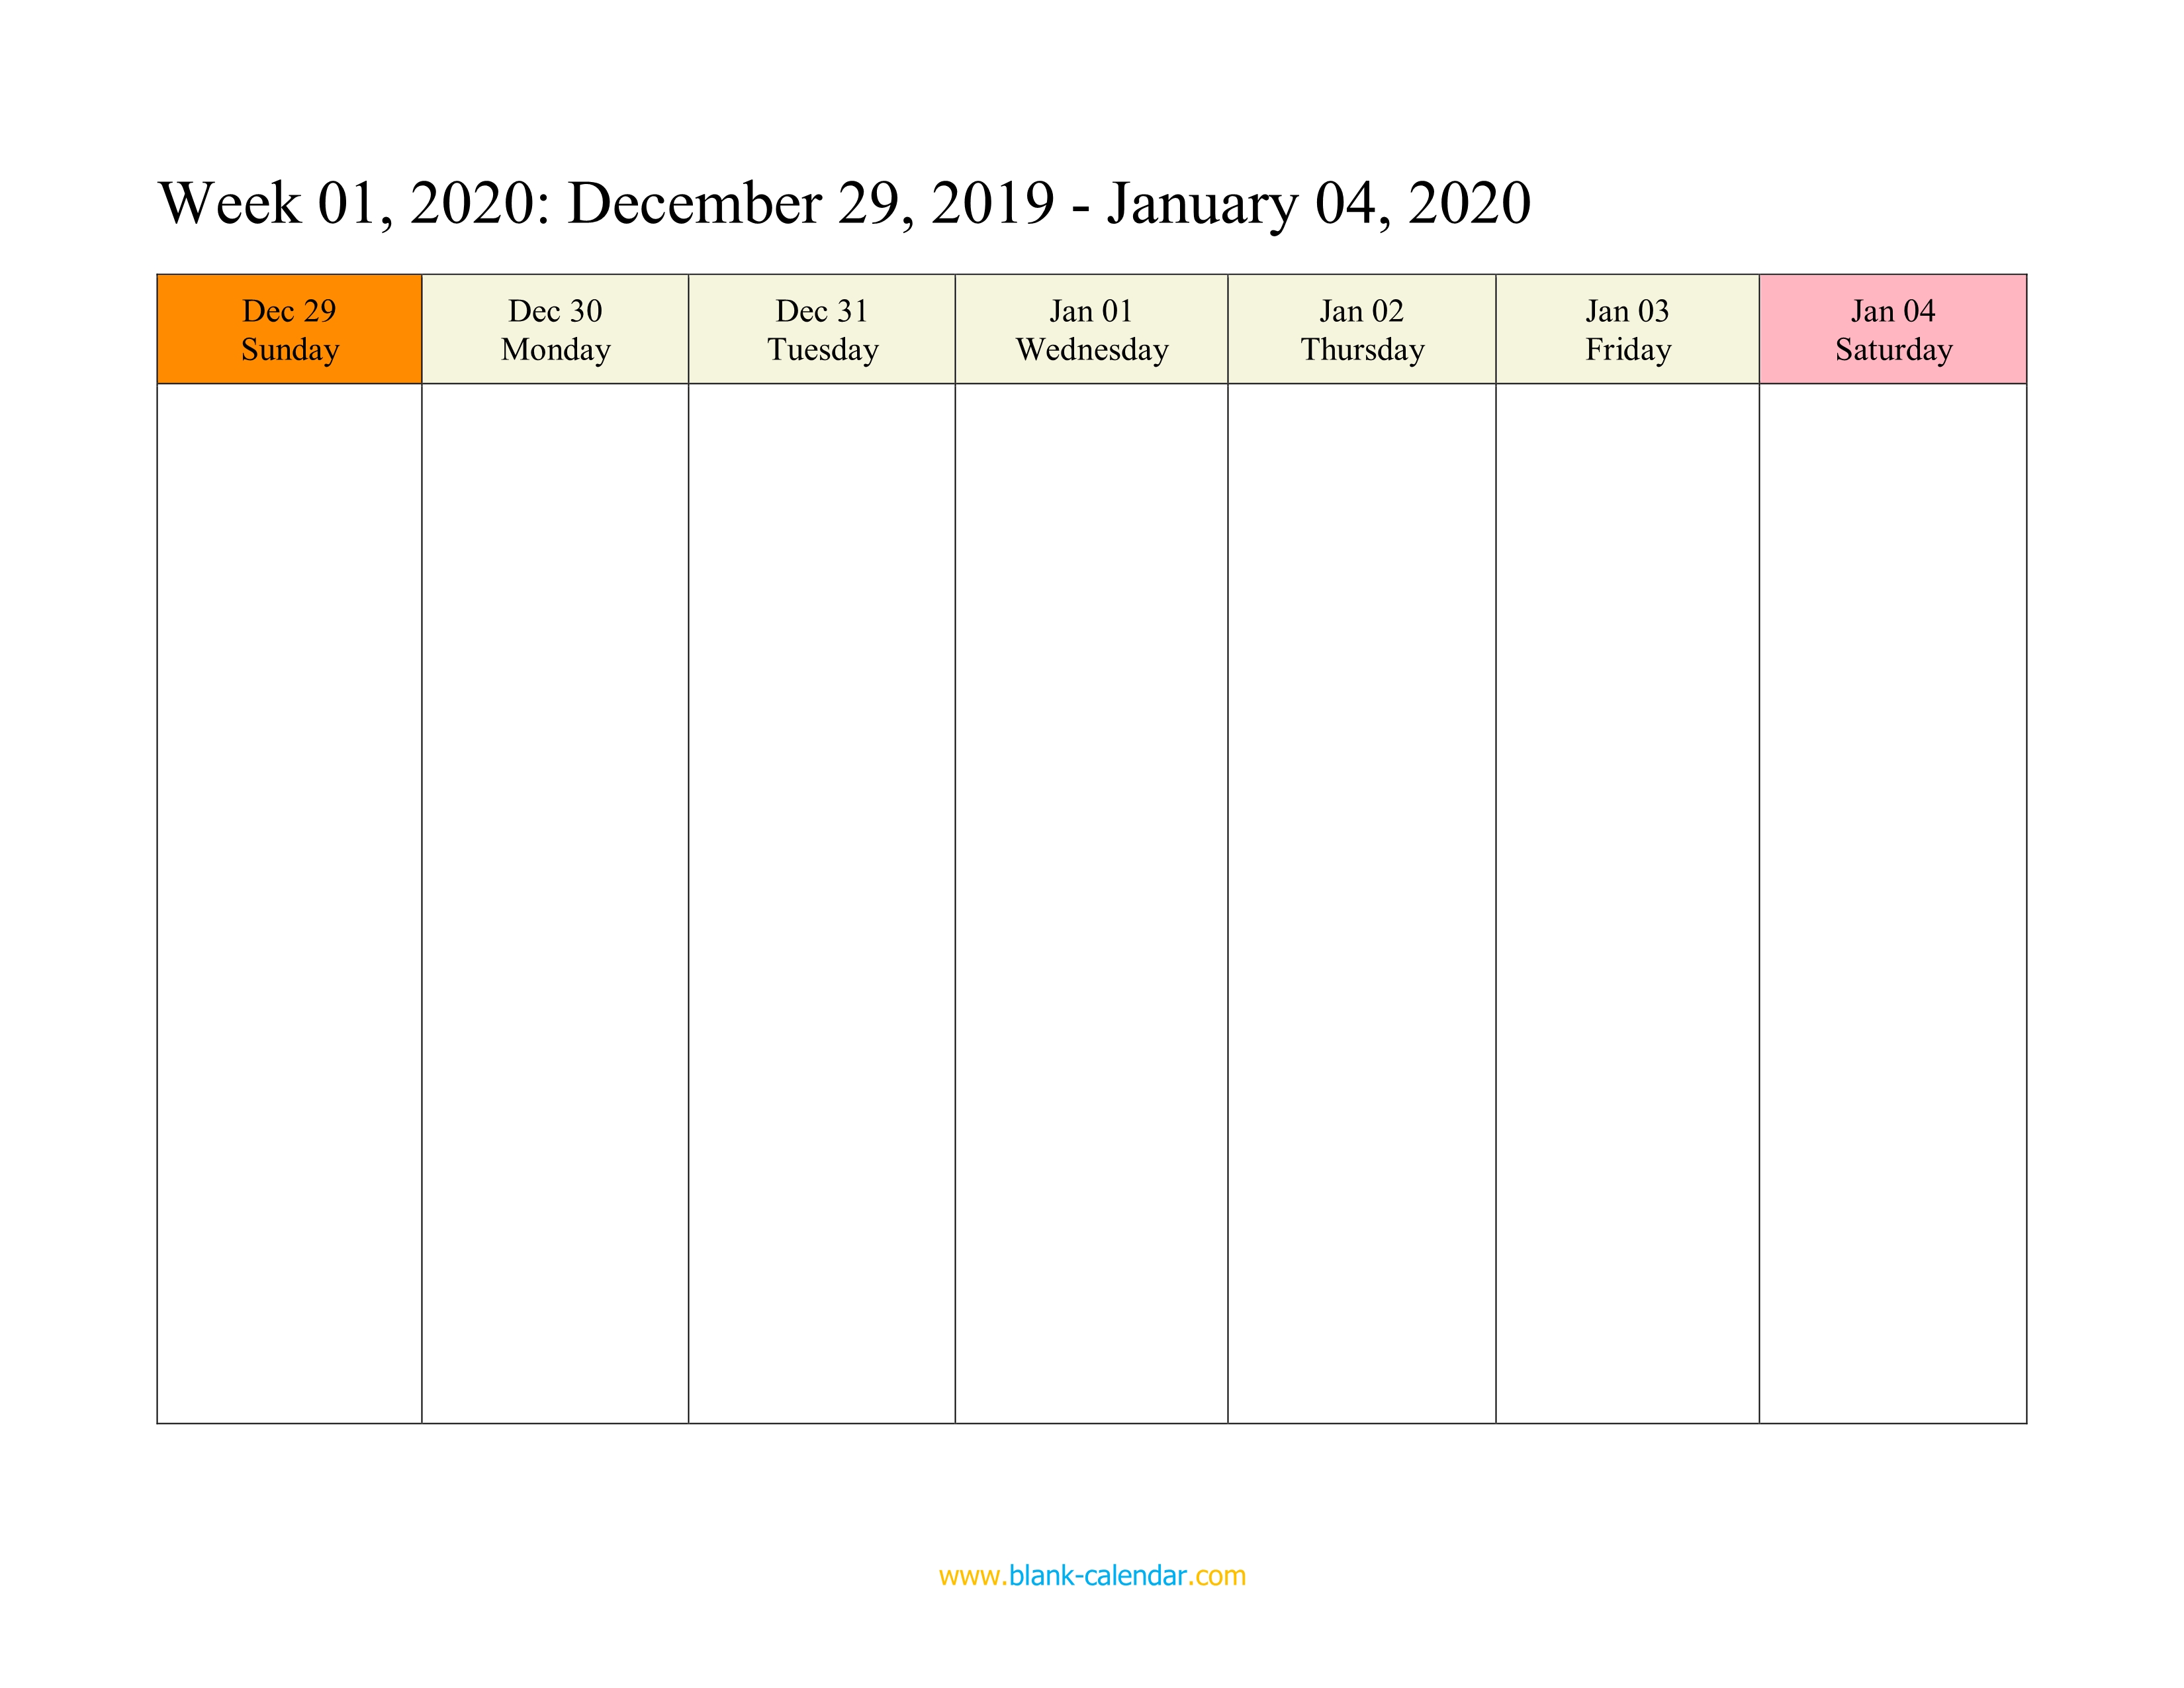 kalender-indonesia-2020-january-2020-weekly-calendar-printable